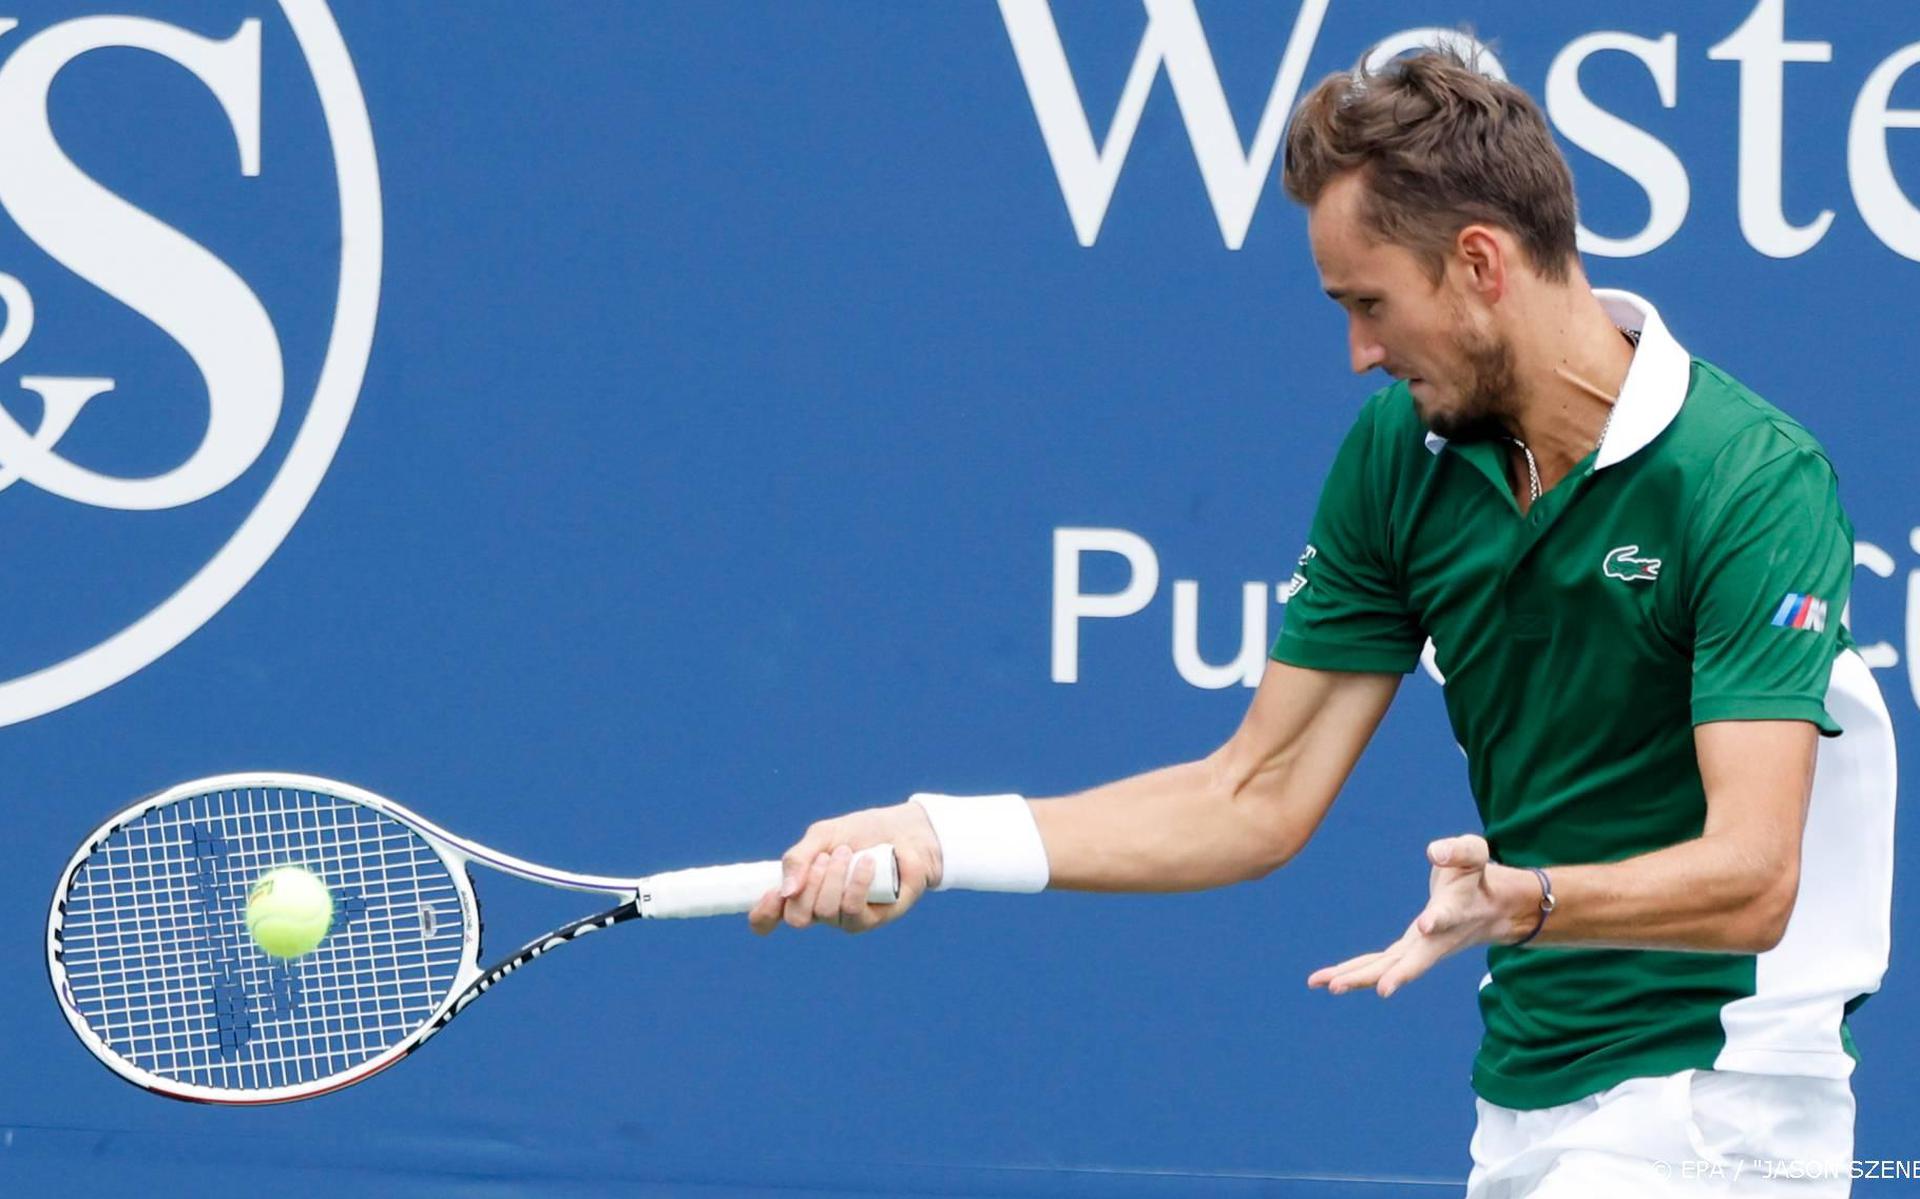 Titelverdediger Medvedev strandt in tennistoernooi Cincinnati